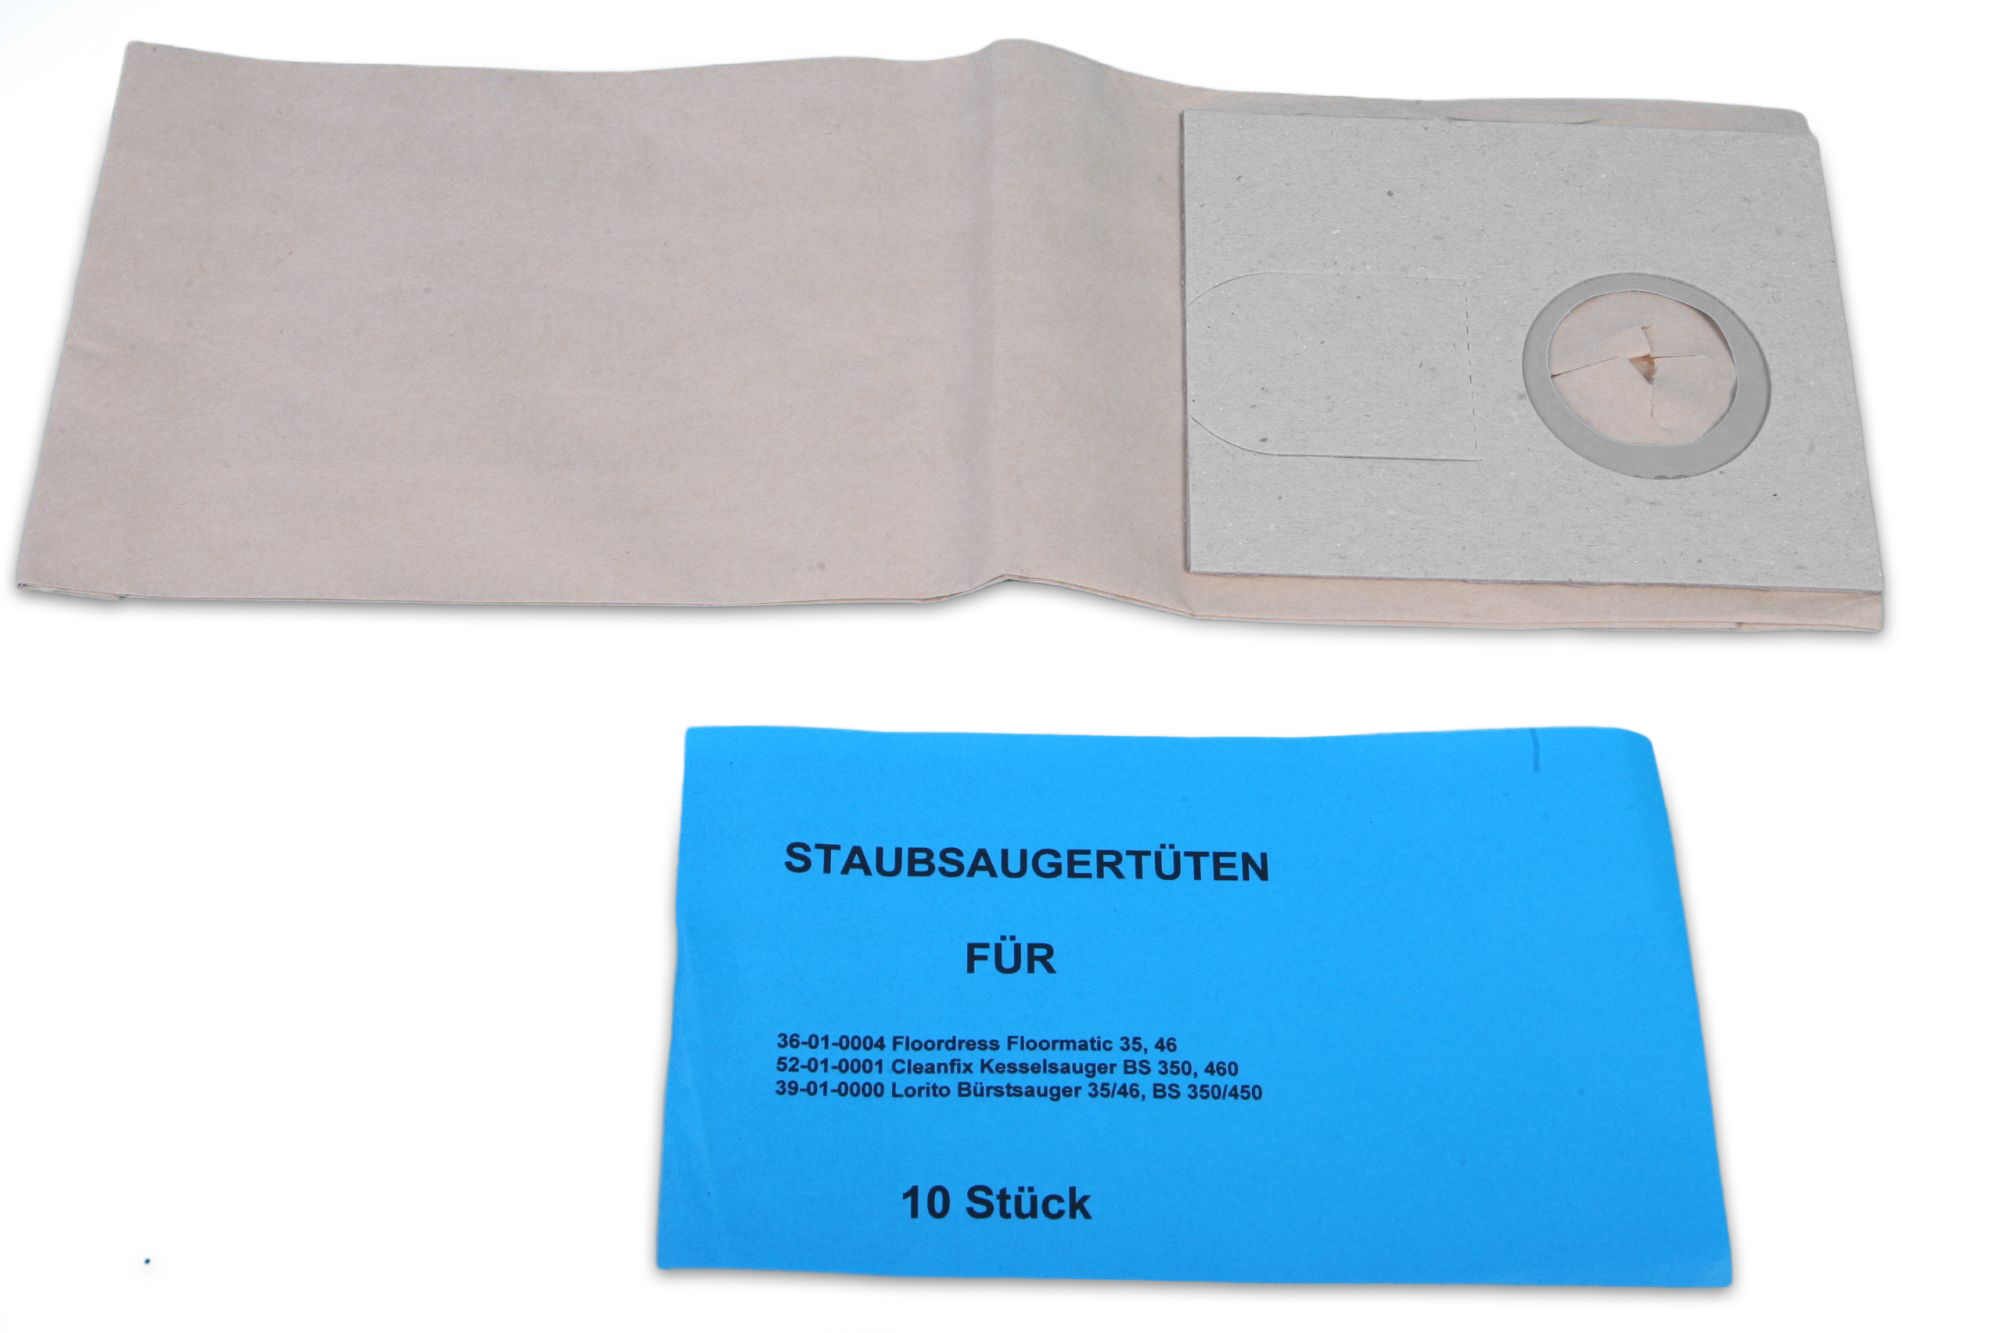 STAUBSAUGERLADEN.DE 10 Staubbeutel passend für Floordress, Lorito Cleanfix, Staubsaugerbeutel Staubsauger